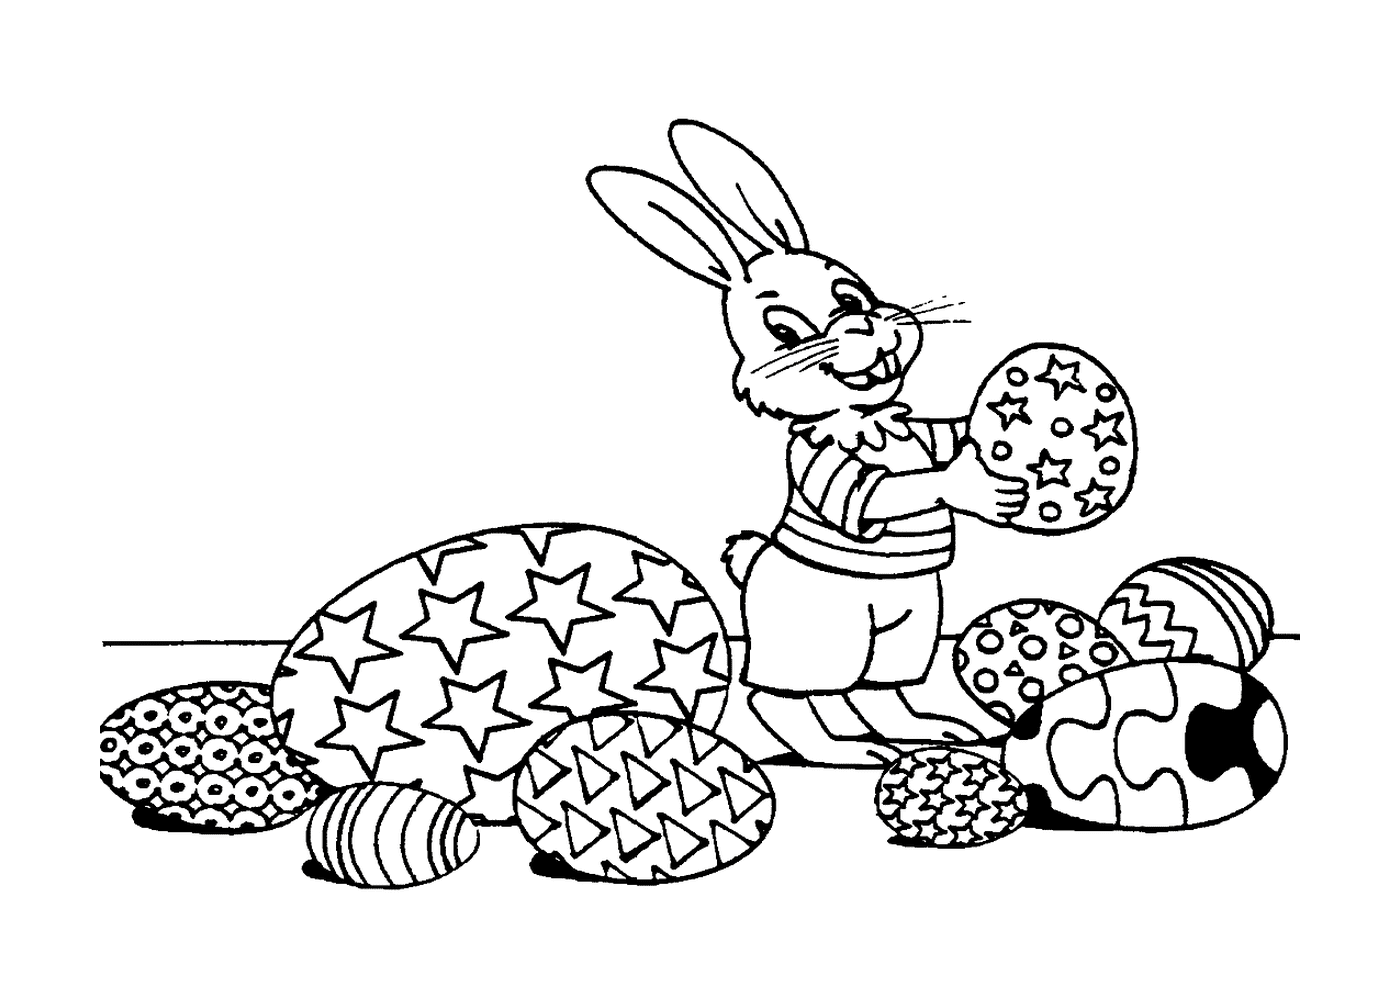  Conejo de Pascua sosteniendo galleta 